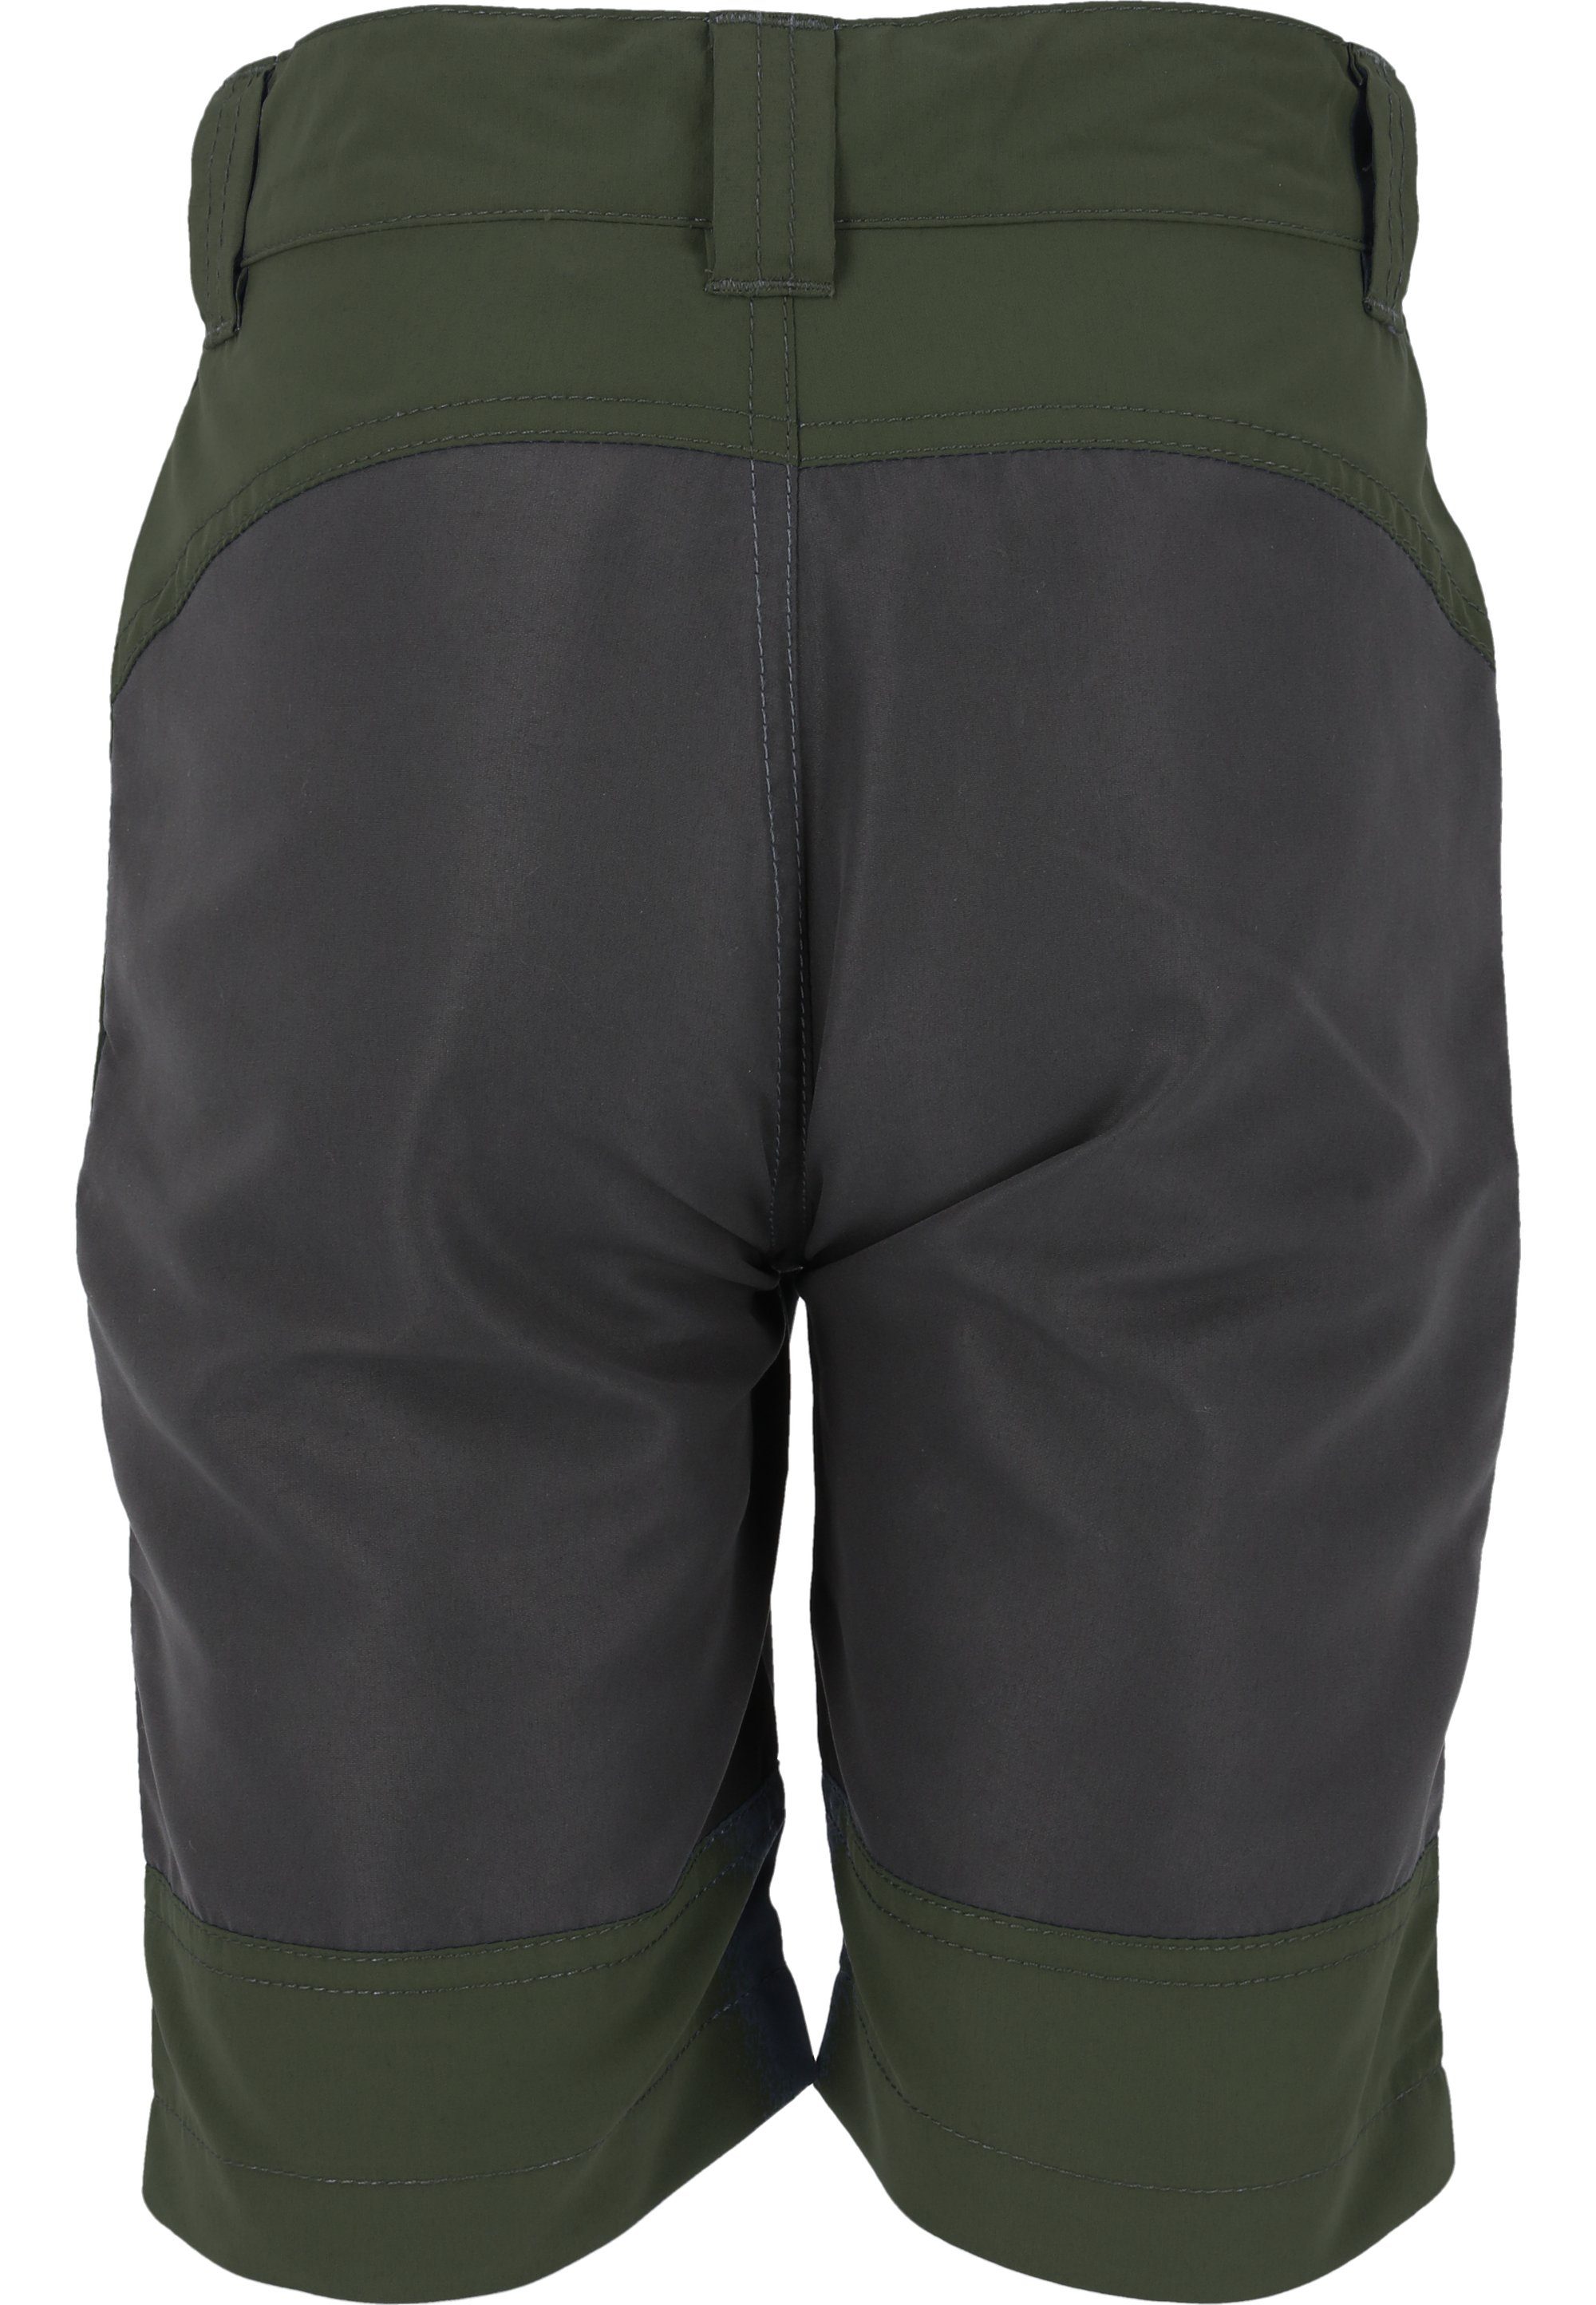 ZIGZAG Shorts Atlantic aus Material robustem olivgrün-schwarz